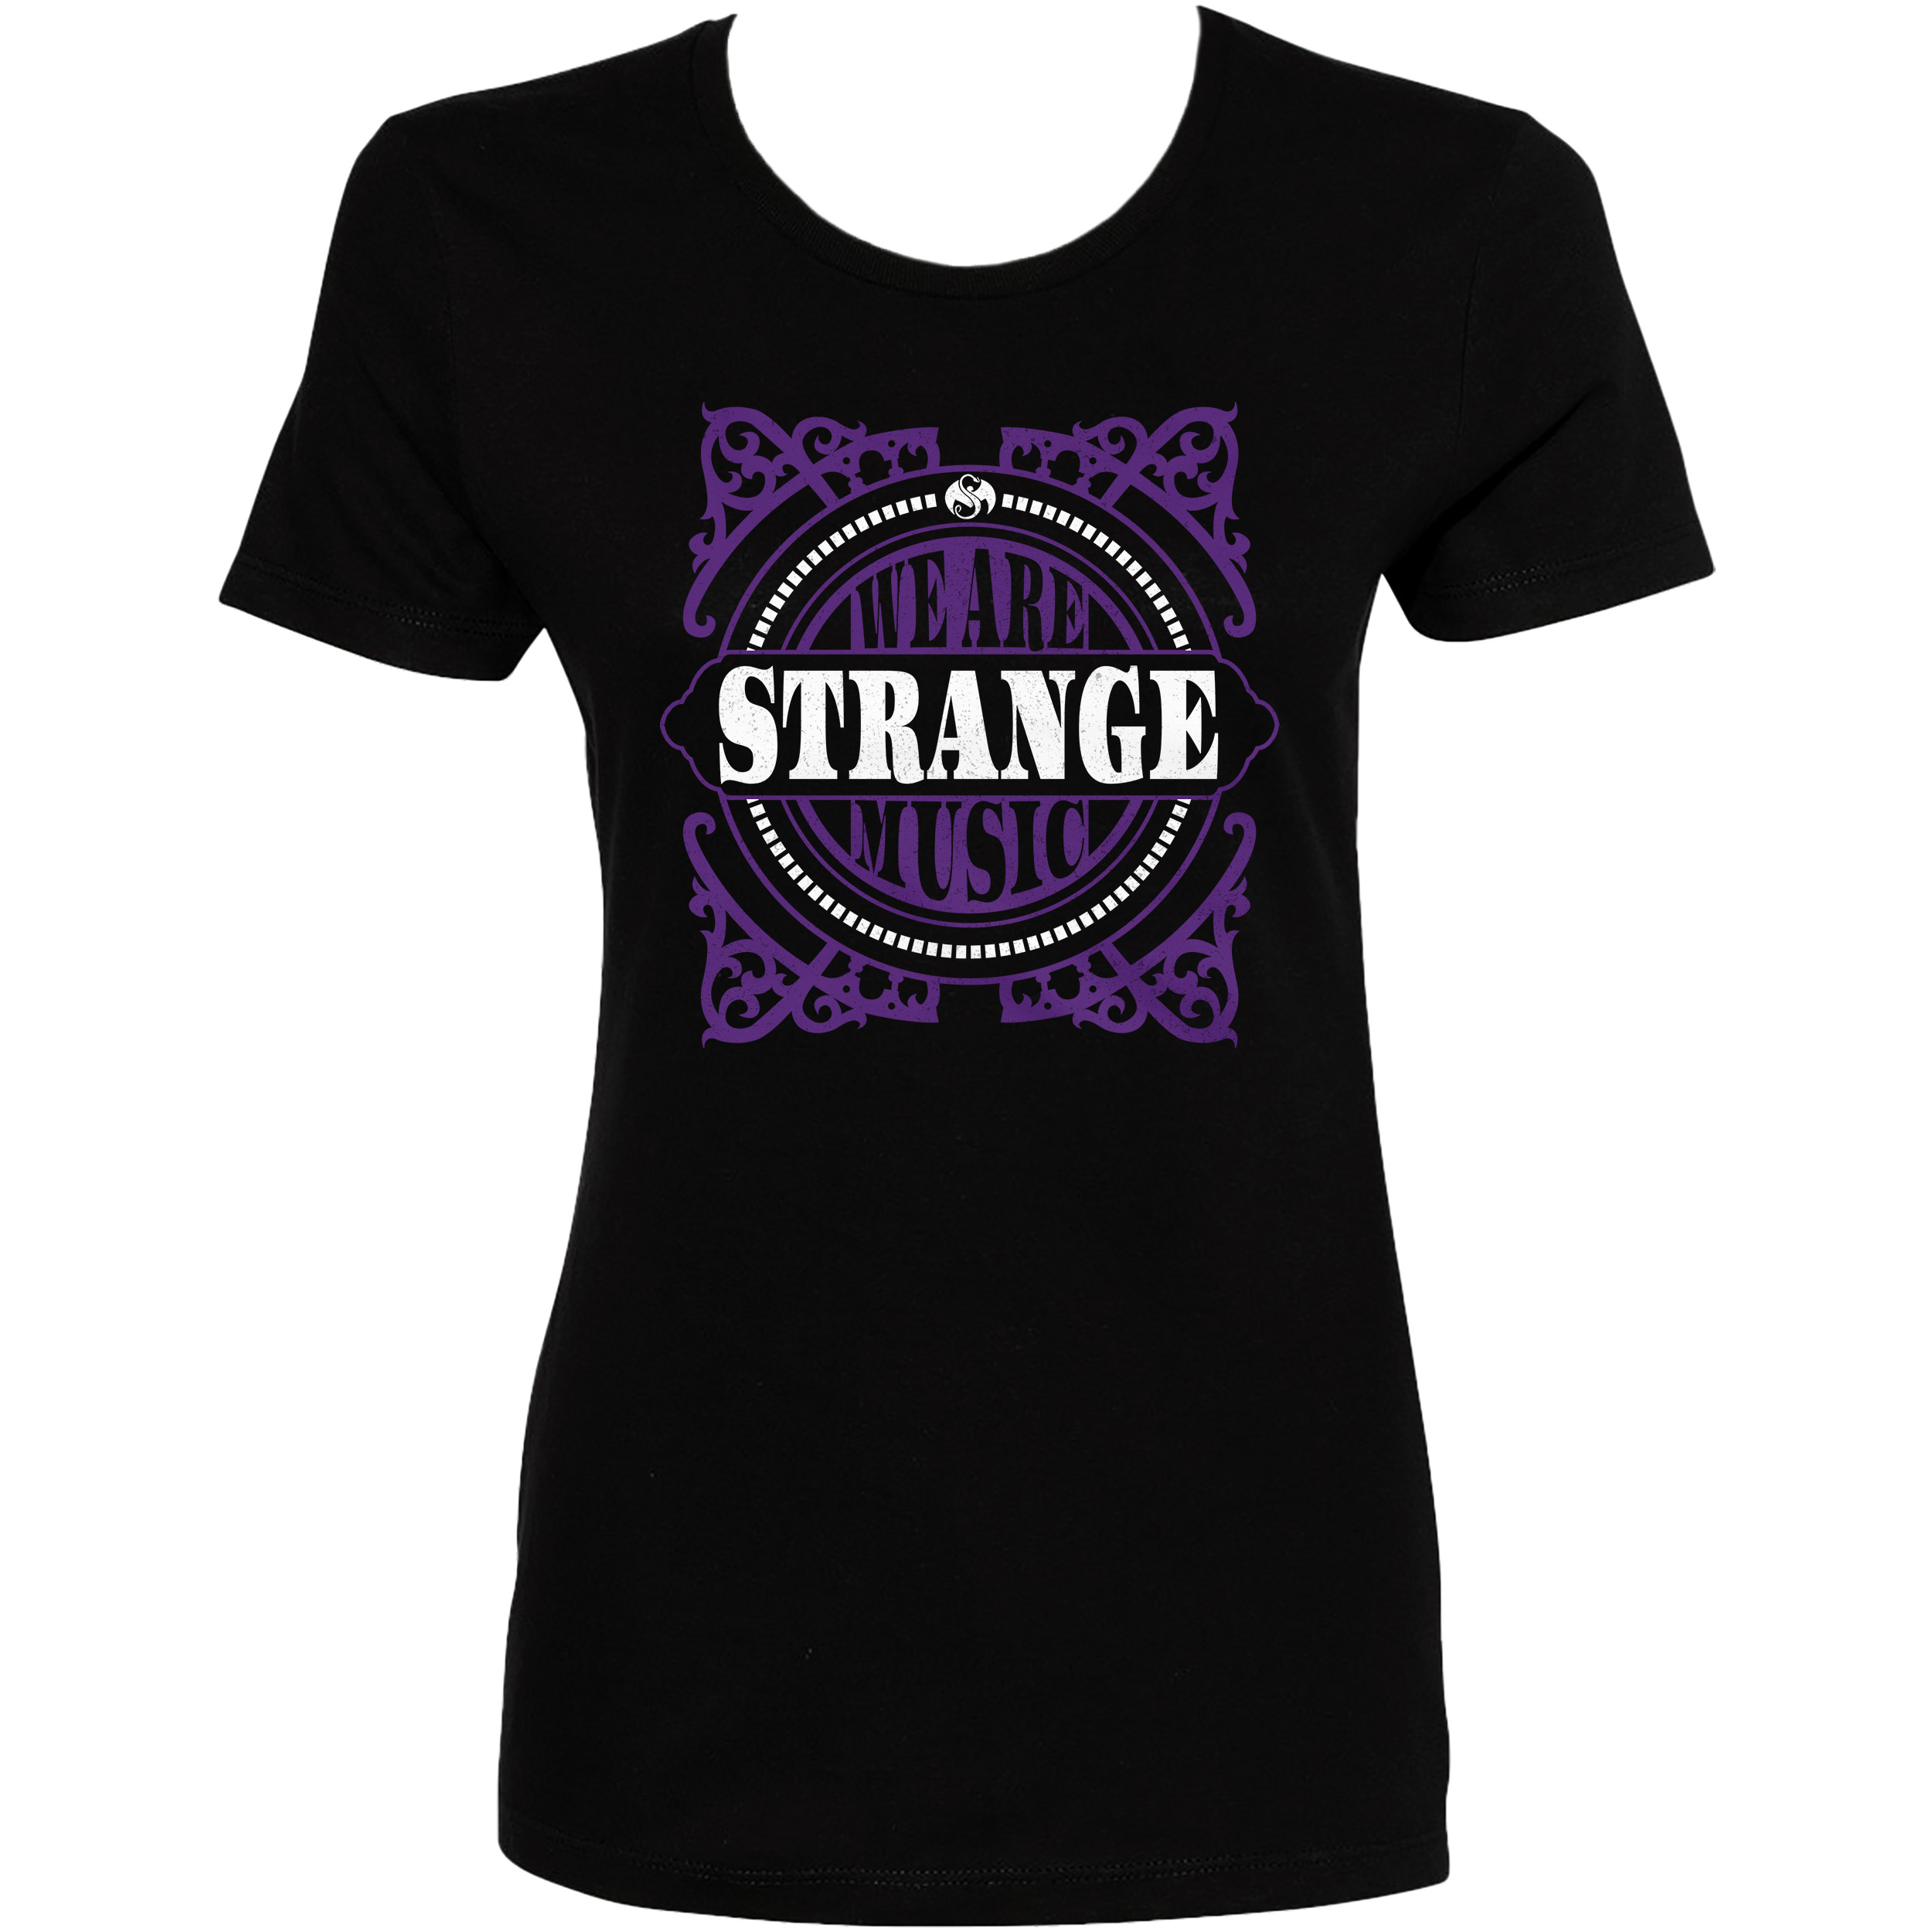 Ladies Shirts - Strange Music, Inc Store